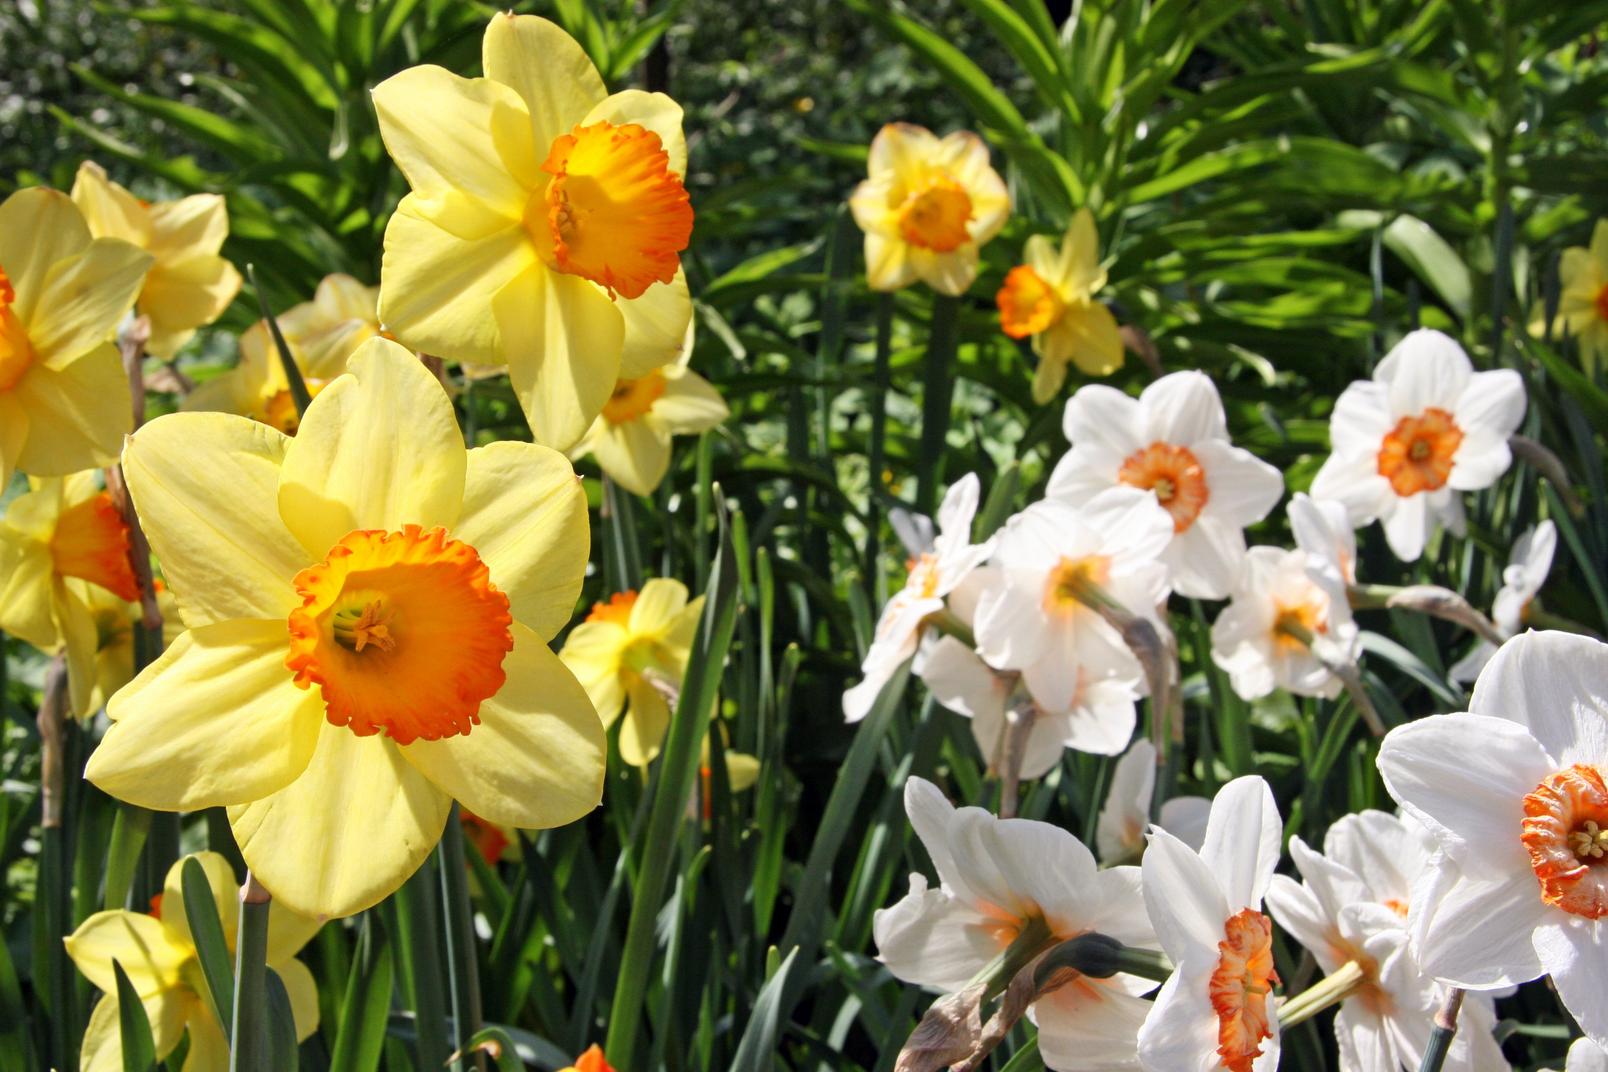 narcissi-yellow-white-flower